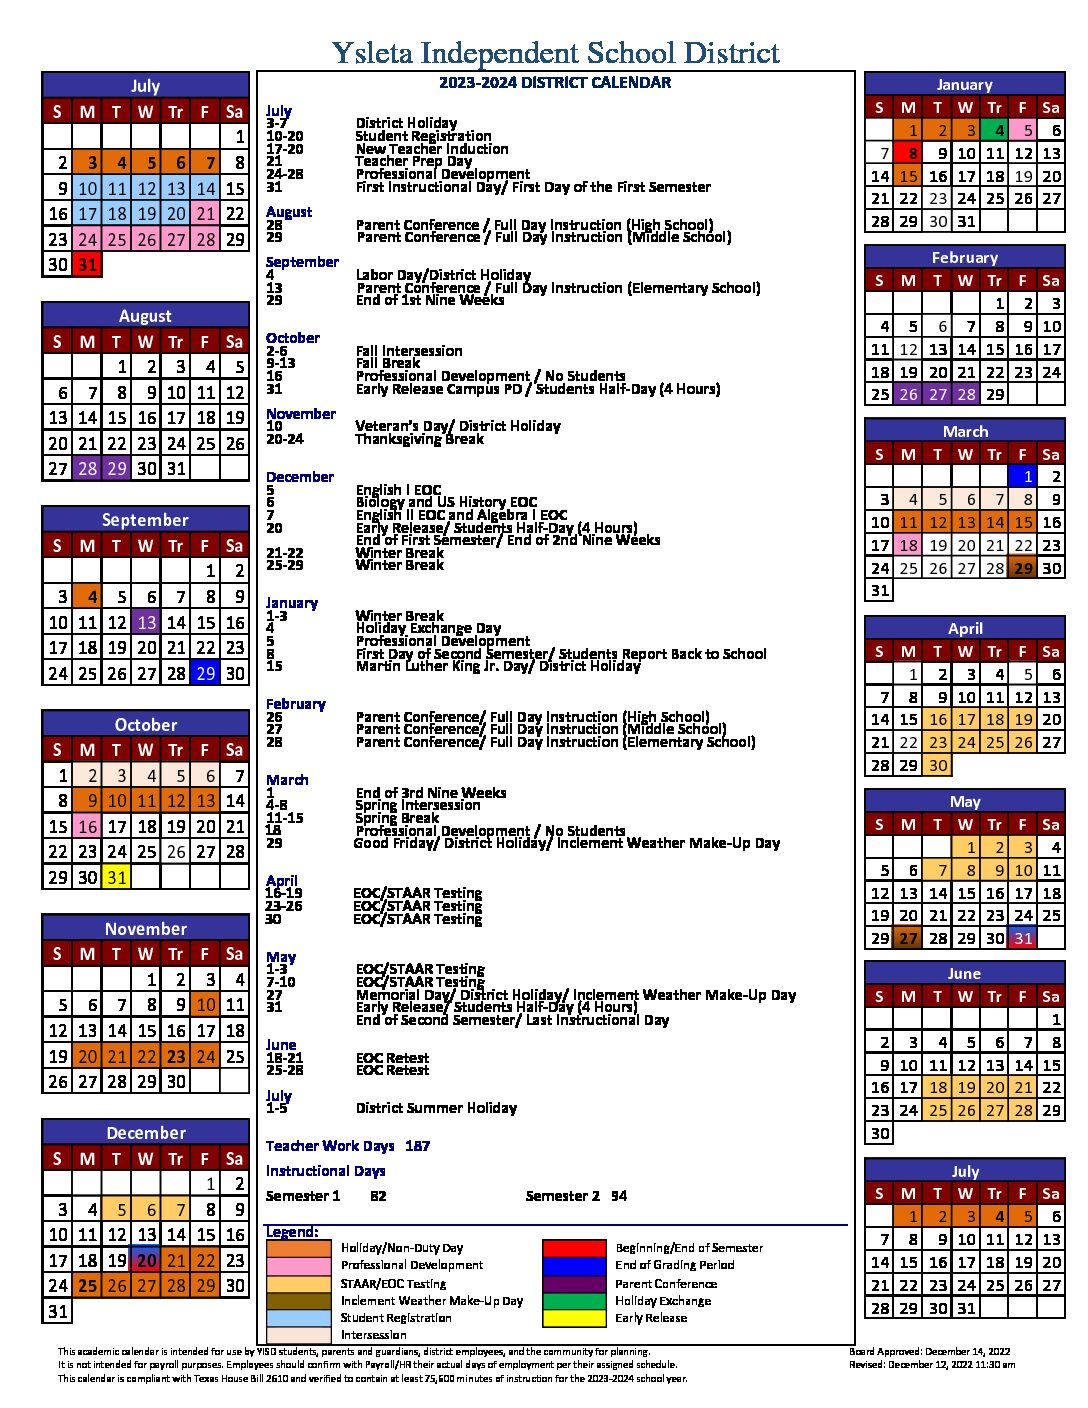 Ysleta Independent School District Calendar 20232024